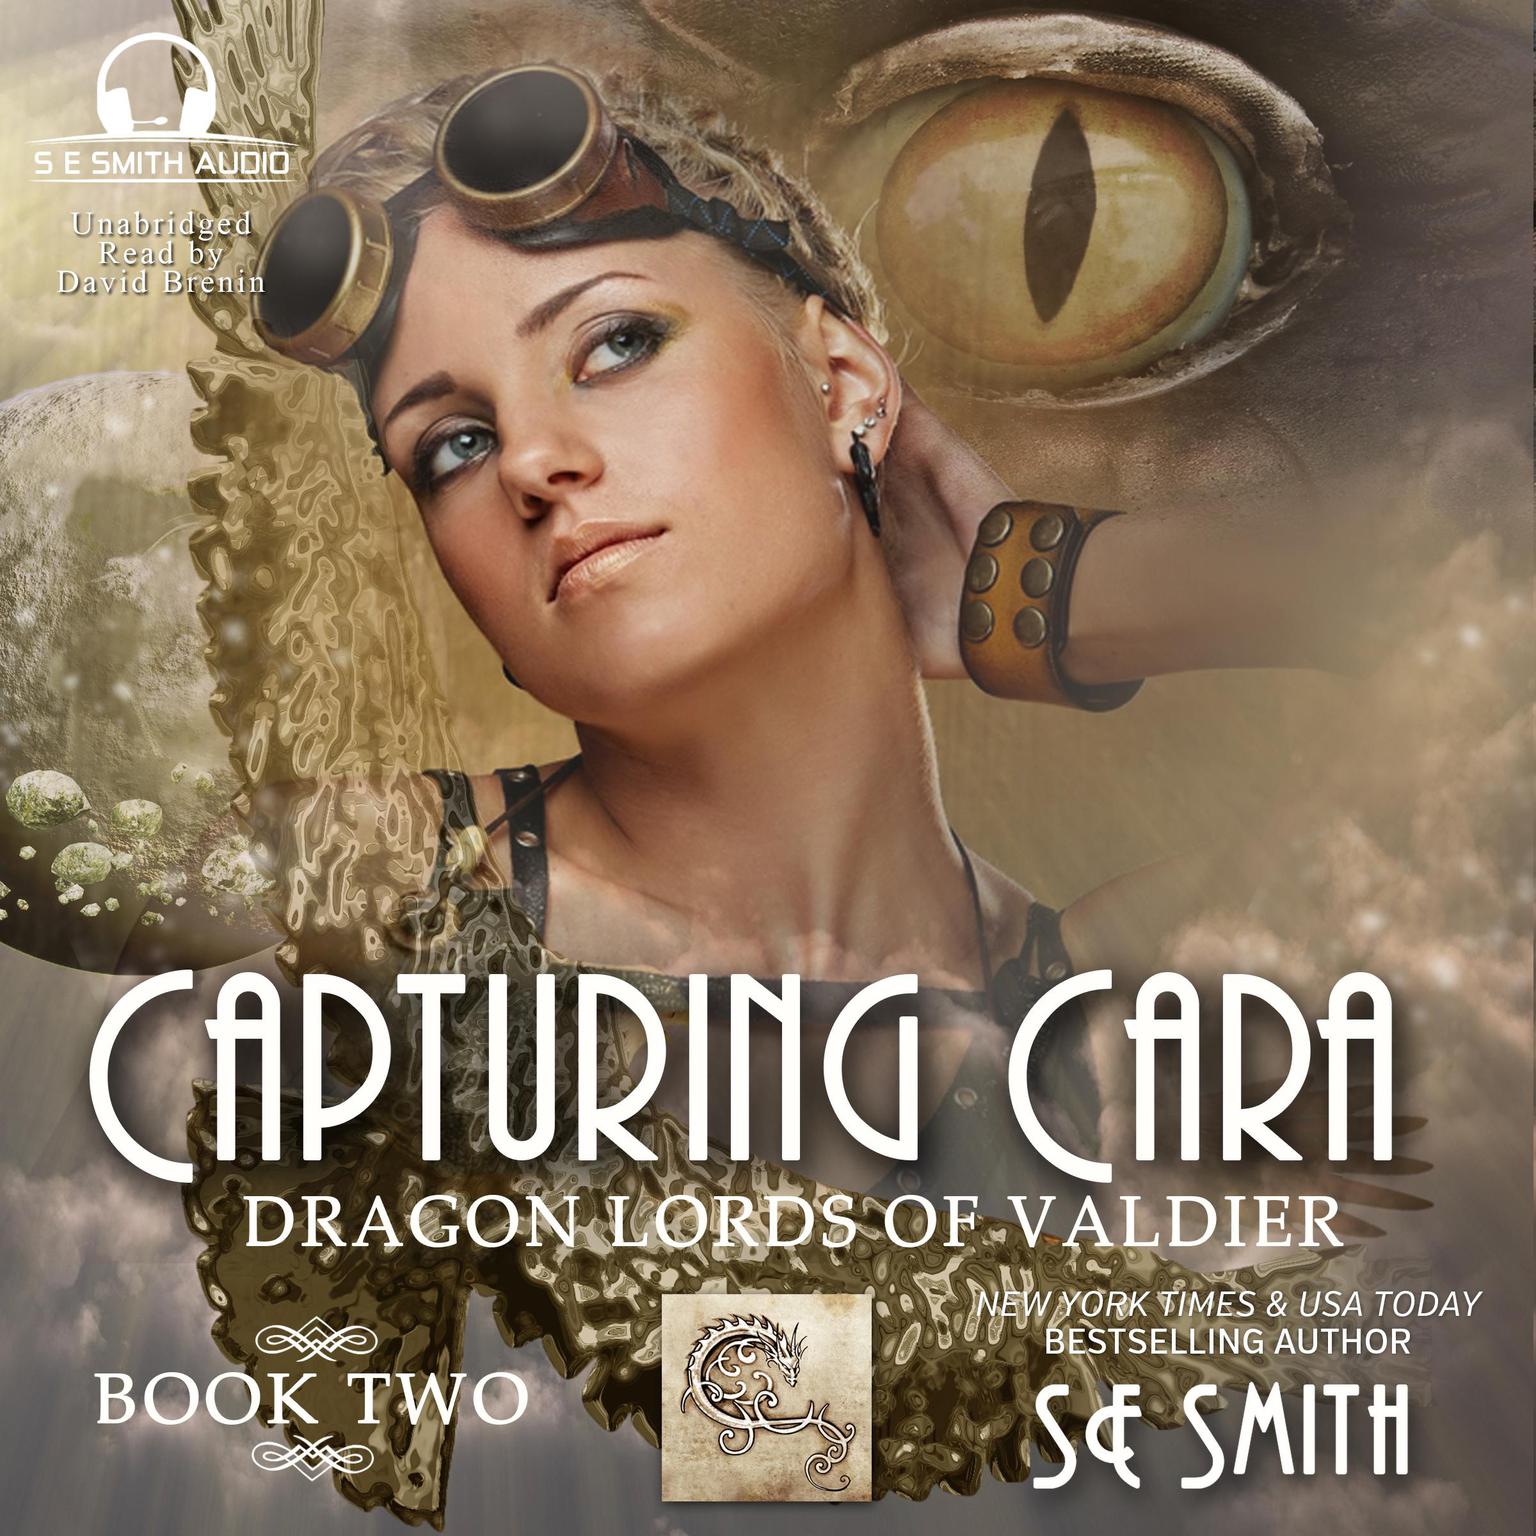 Capturing Cara Audiobook, by S.E. Smith